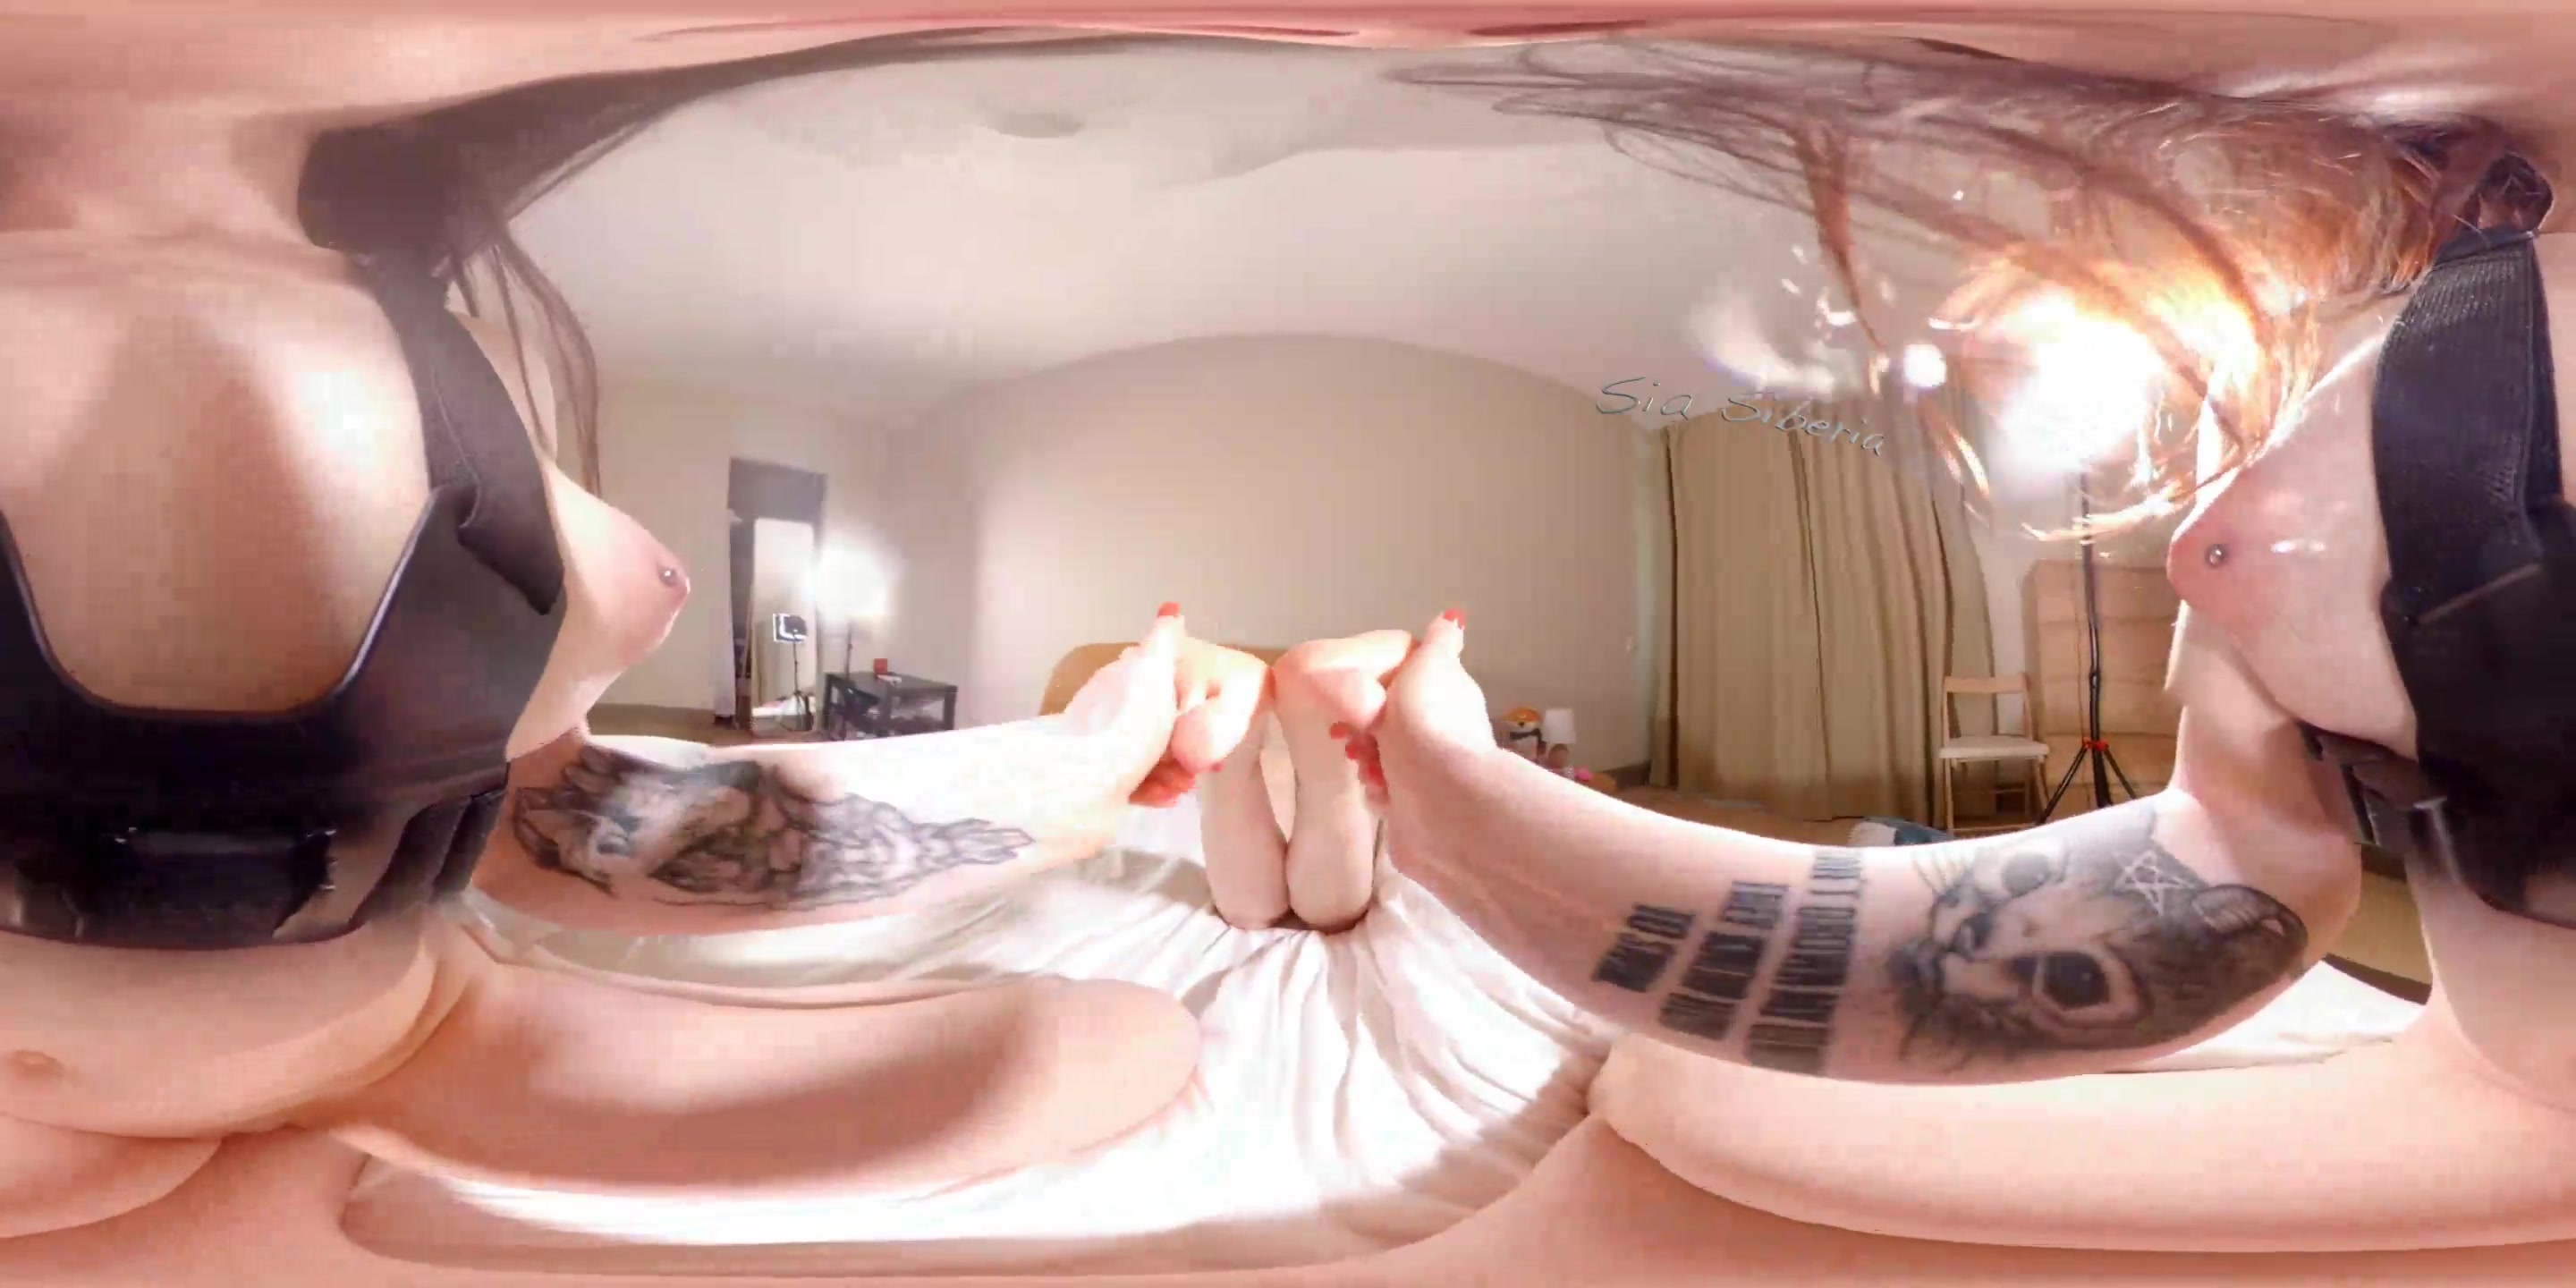 VR sex two step sisters in bed little reislin siasiberia virtual free porn videos